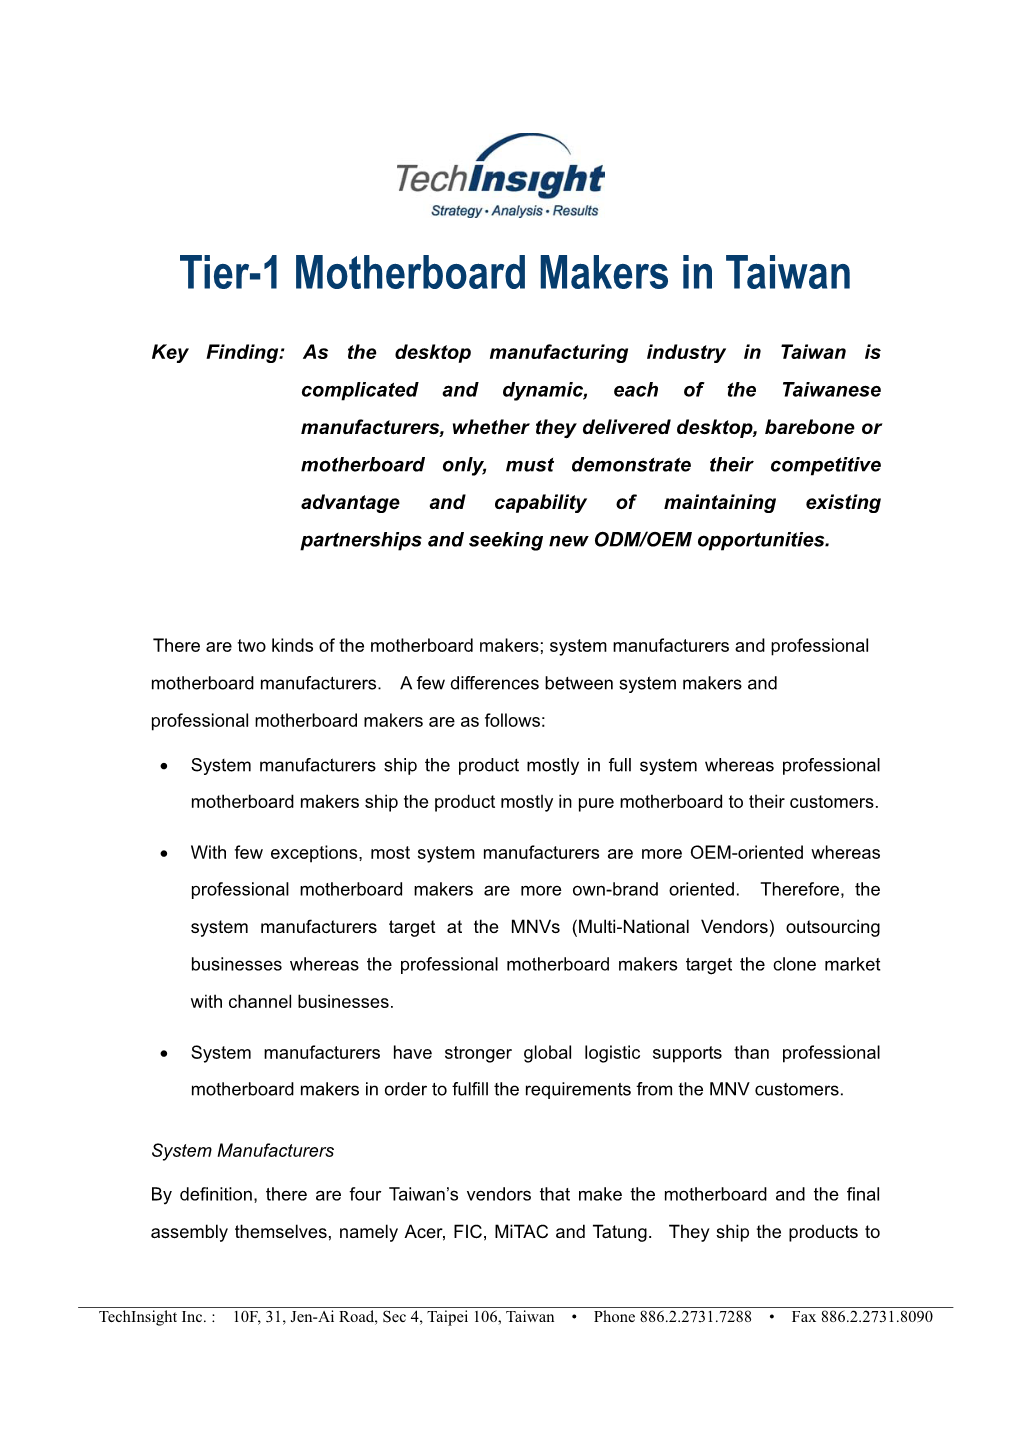 Tier-1 Motherboard Makers in Taiwan